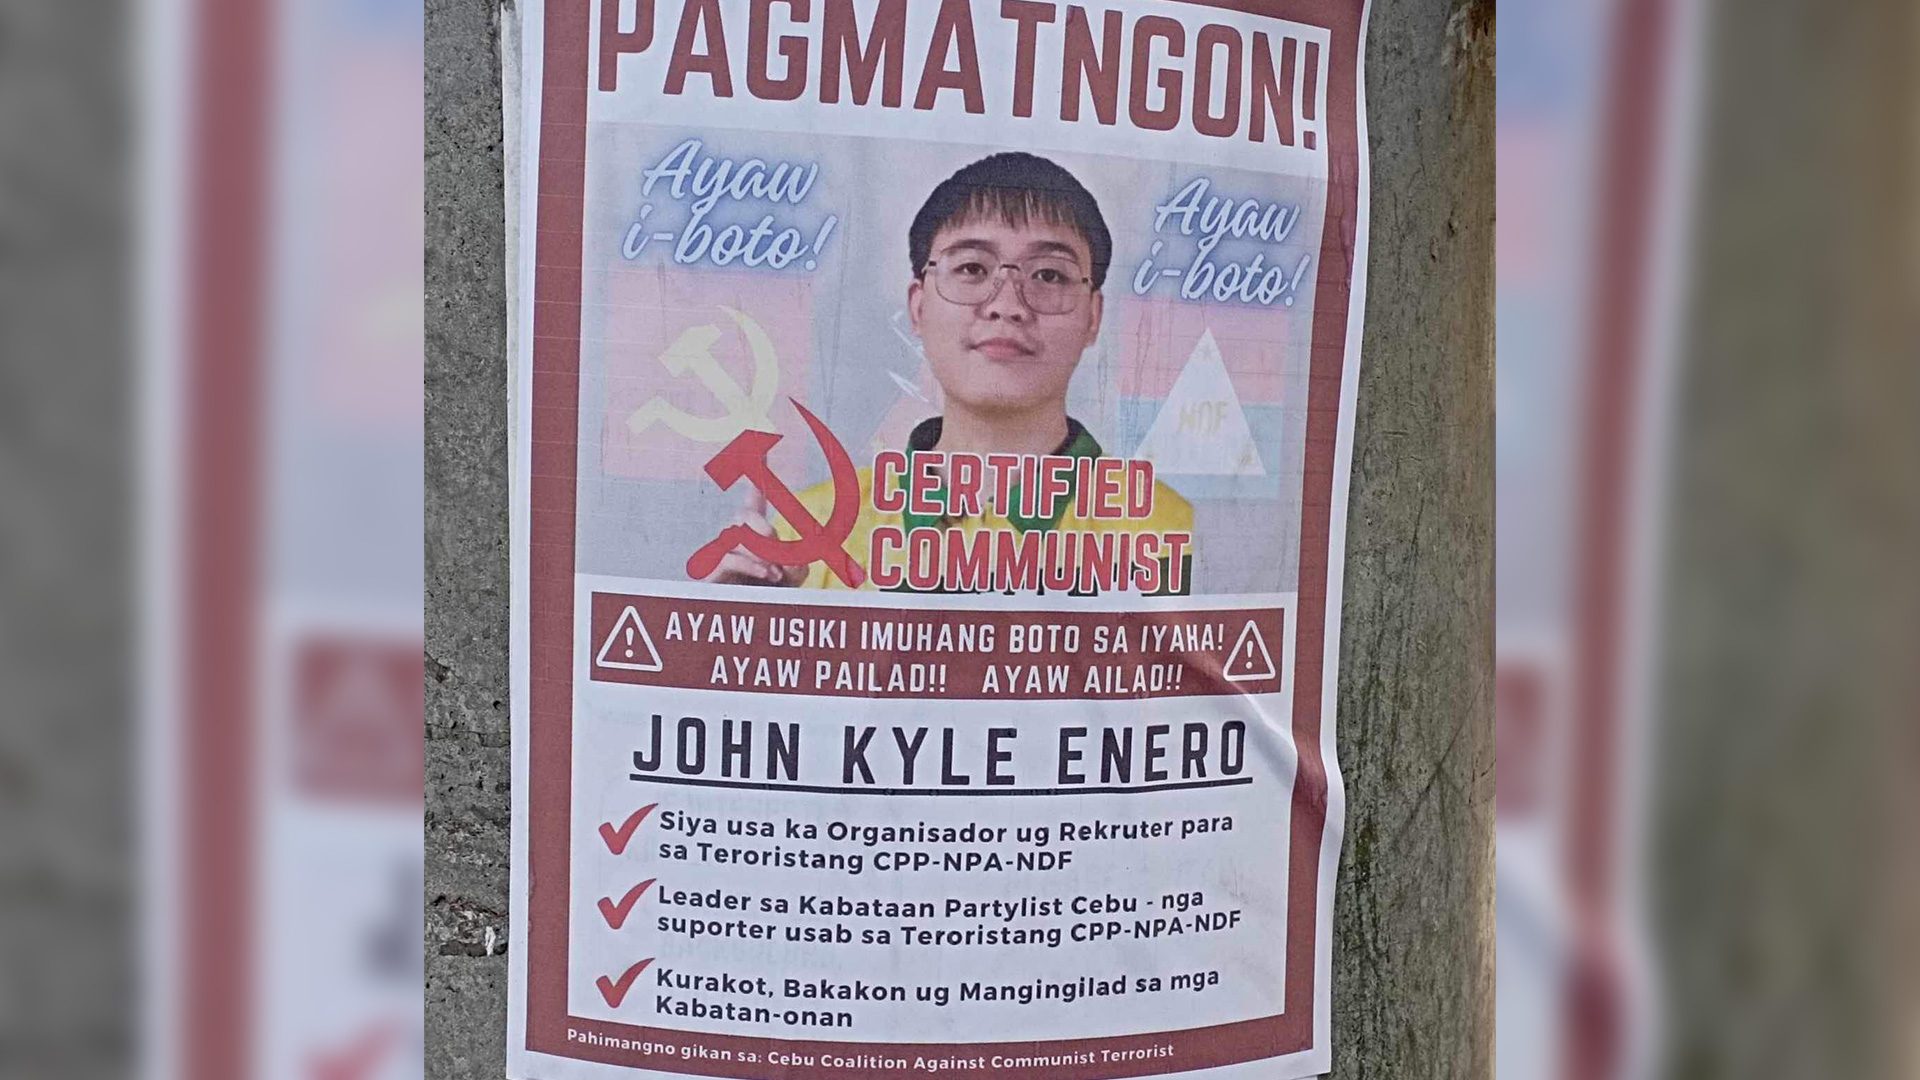 Sangguniang Kabataan candidate red-tagged via posters spotted in Cebu